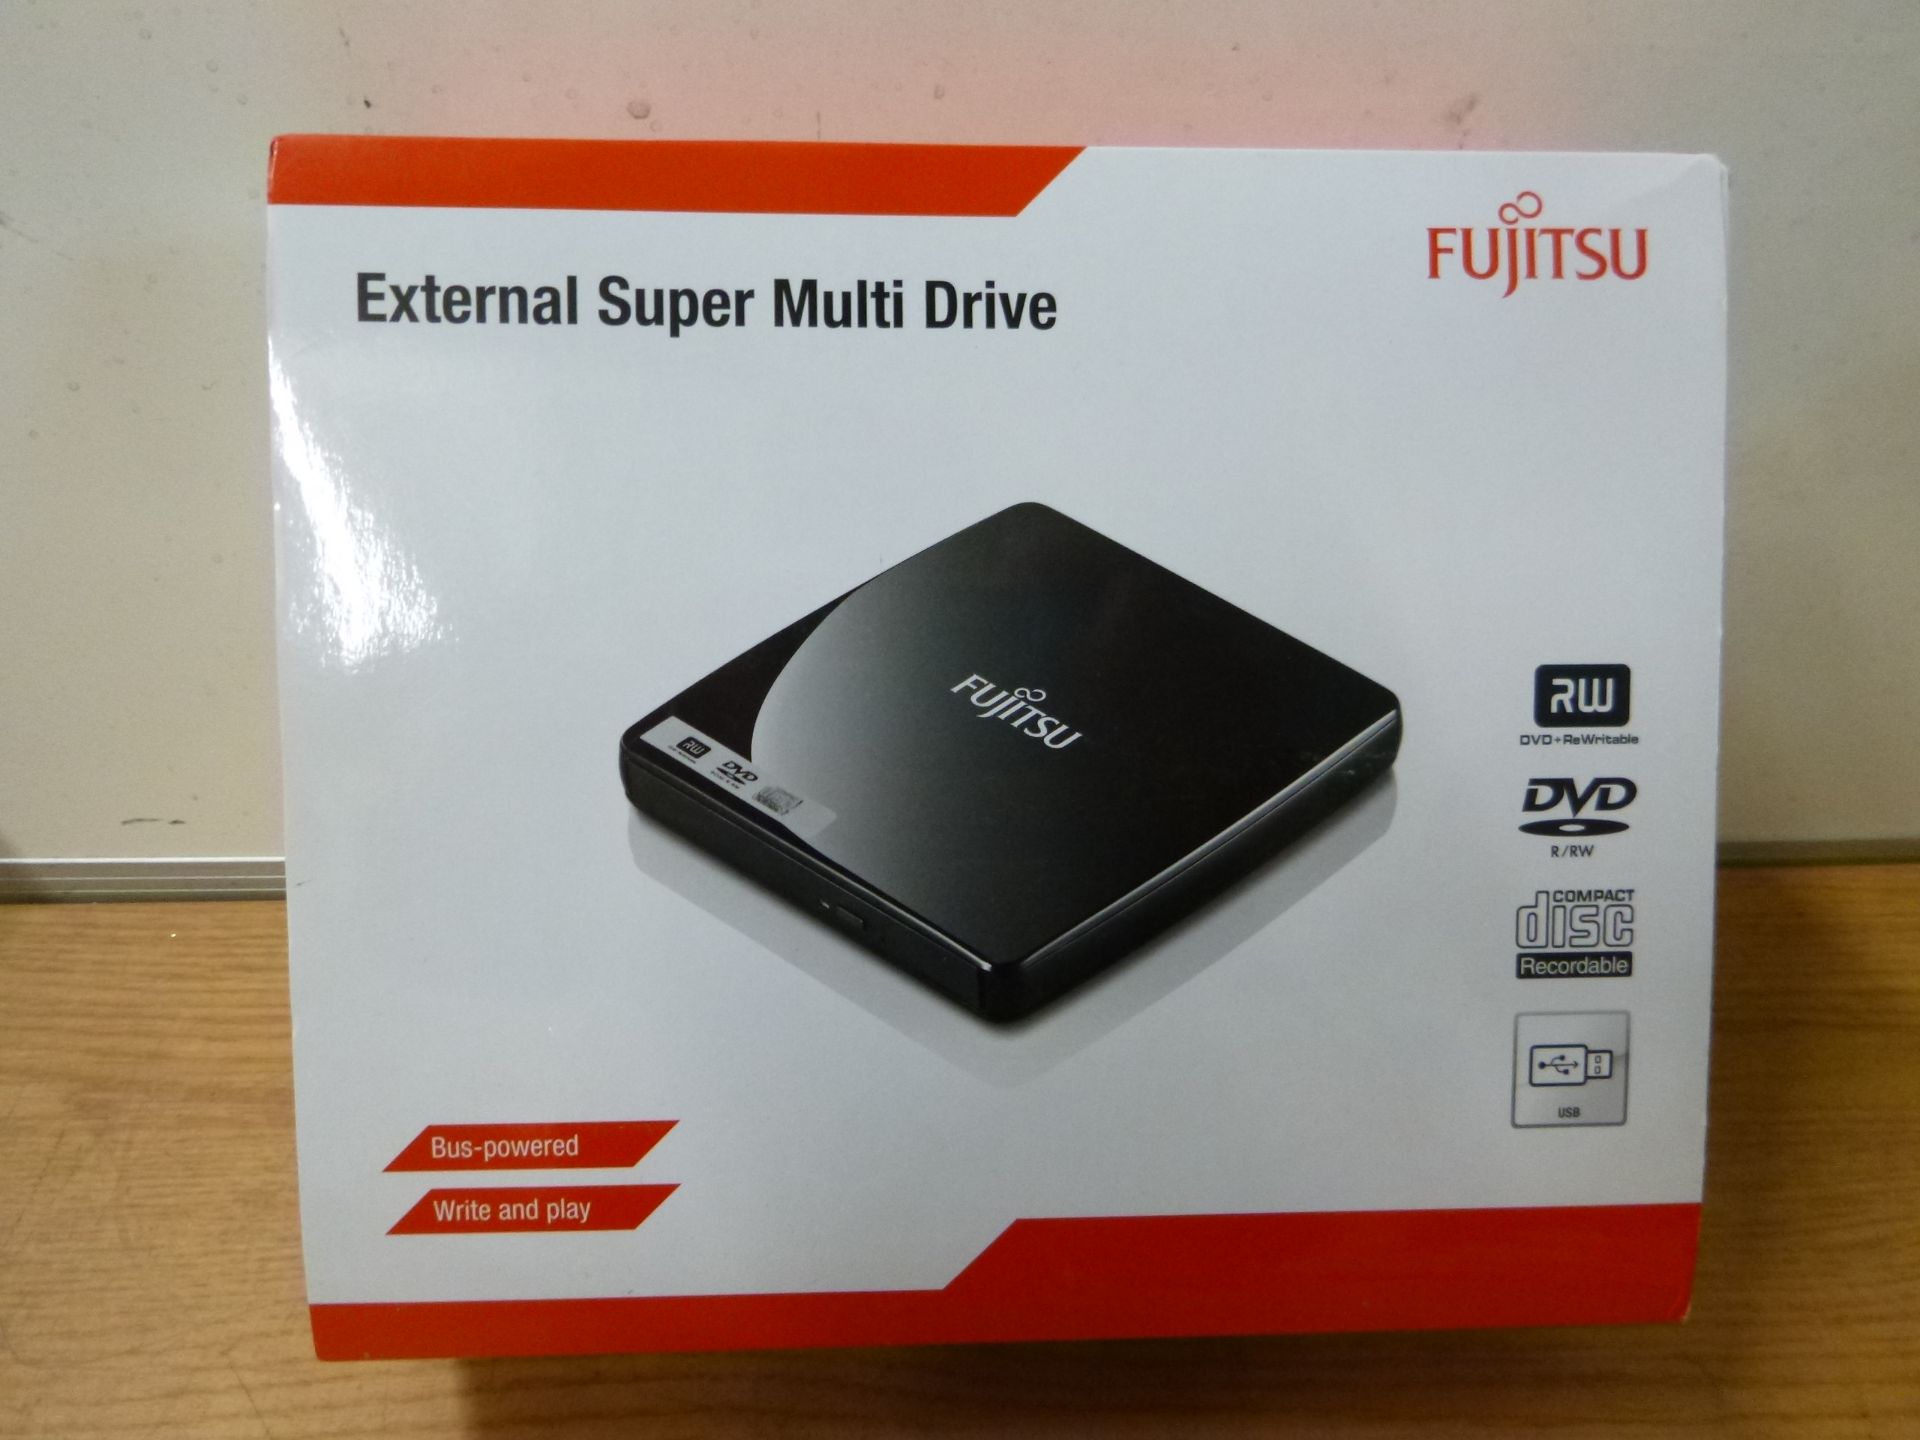 FUJITSU EXTERNAL SUPER MULTI/BLU-RAYDRIVE USB DVDRW. BOXED